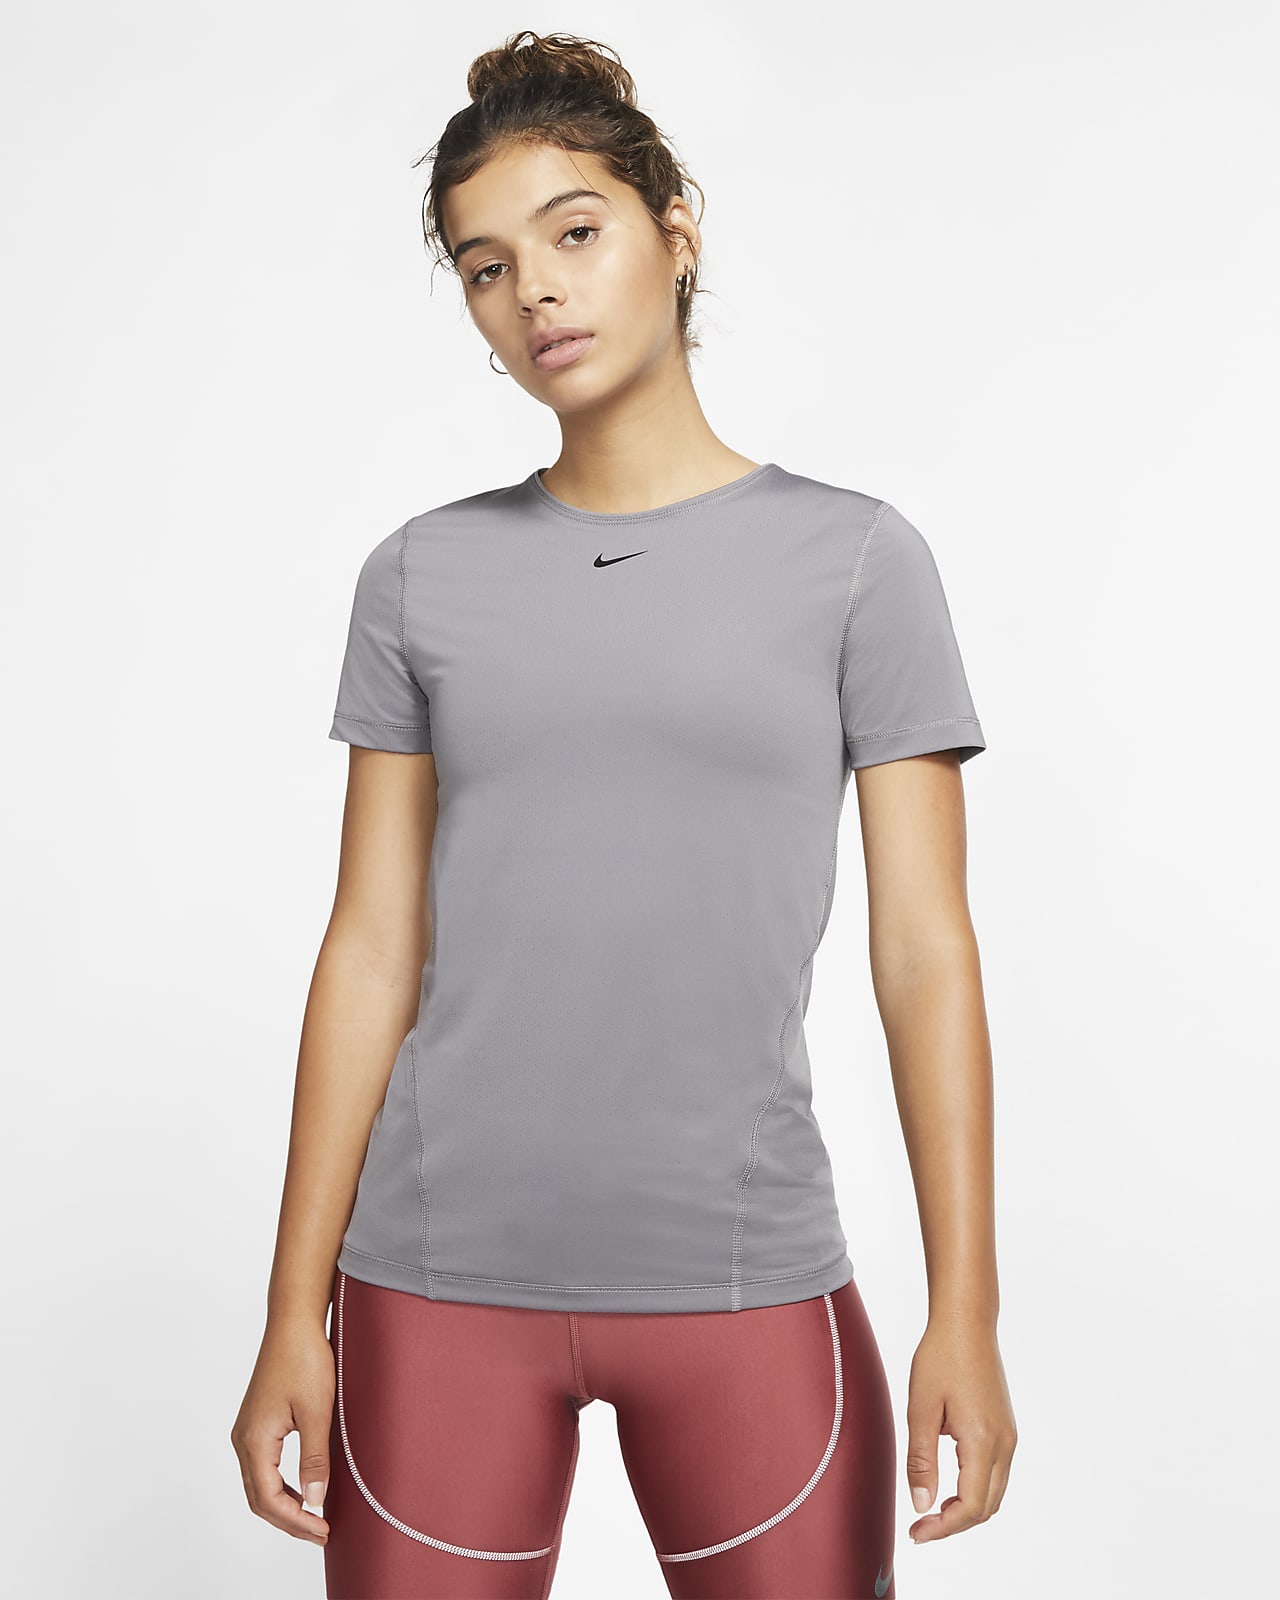 Short-Sleeve Mesh Training Top. Nike 